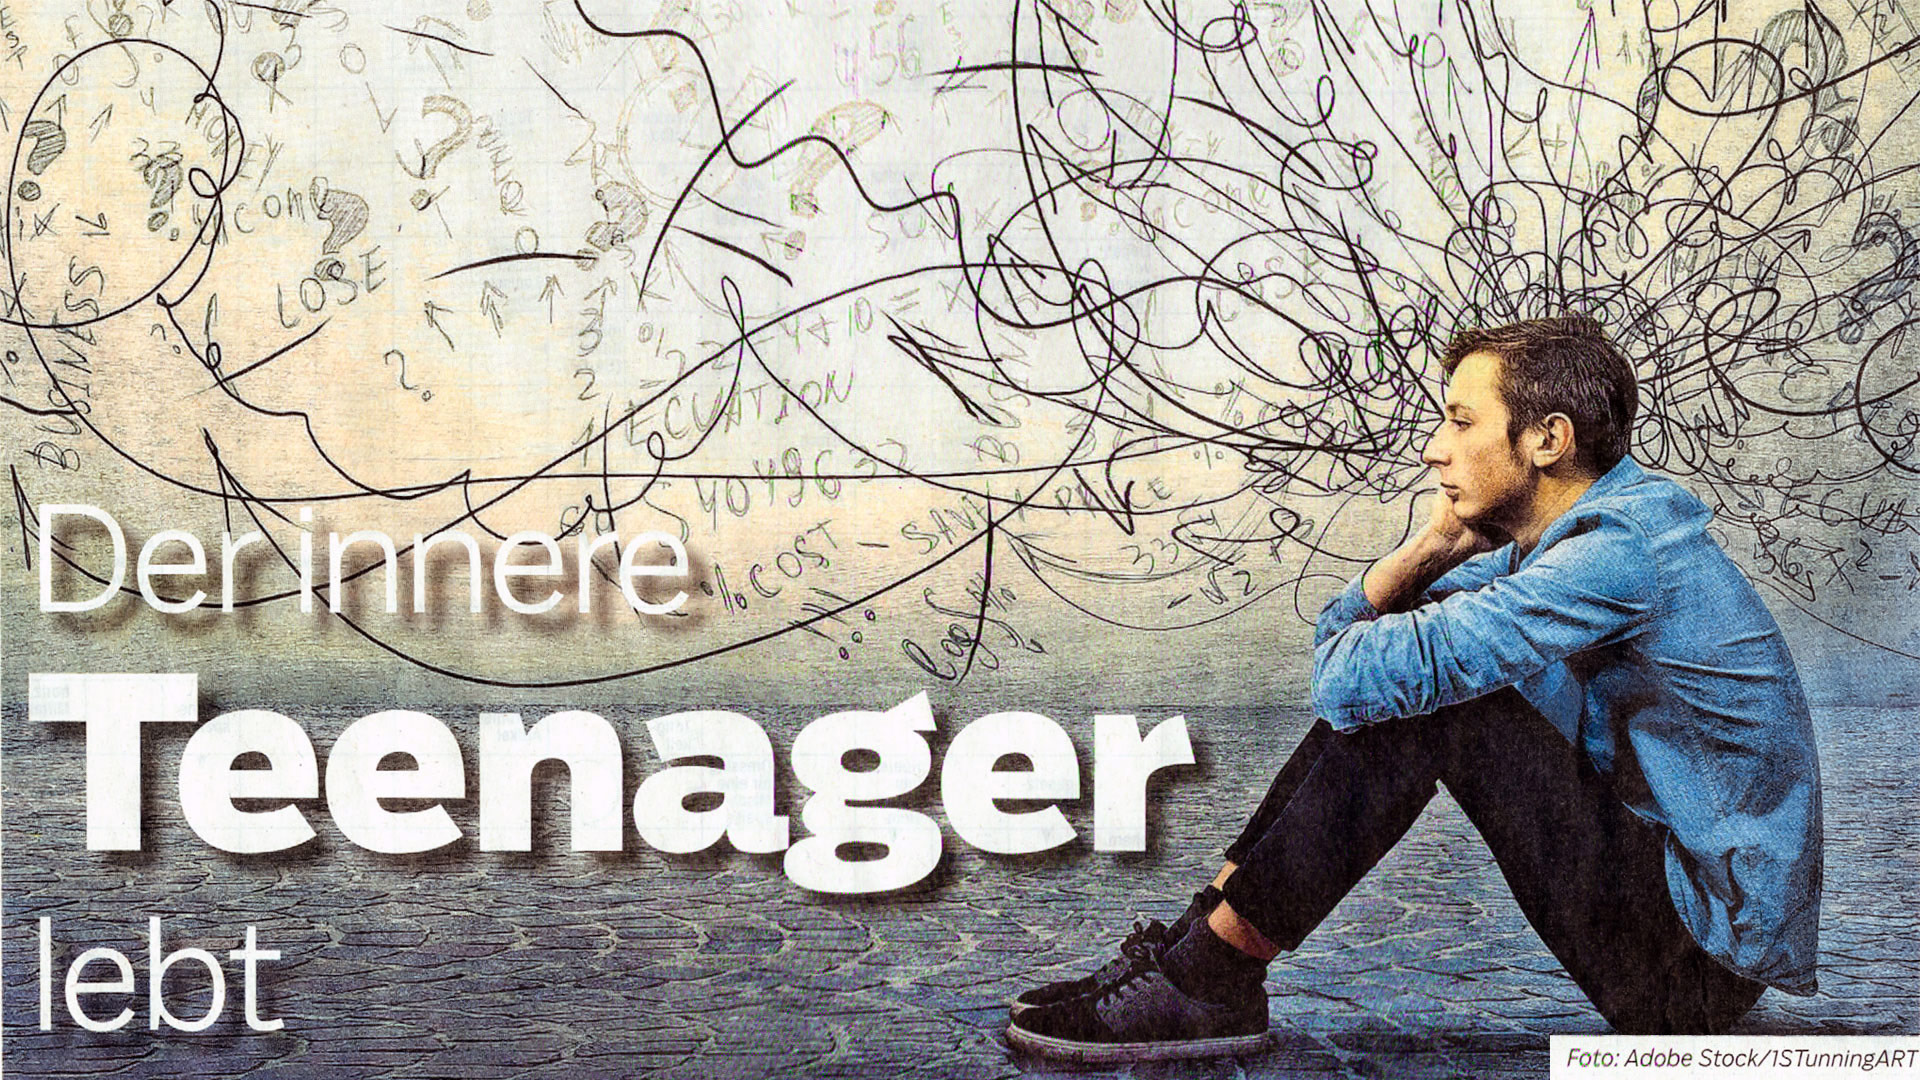 „Der innere Teenager lebt“